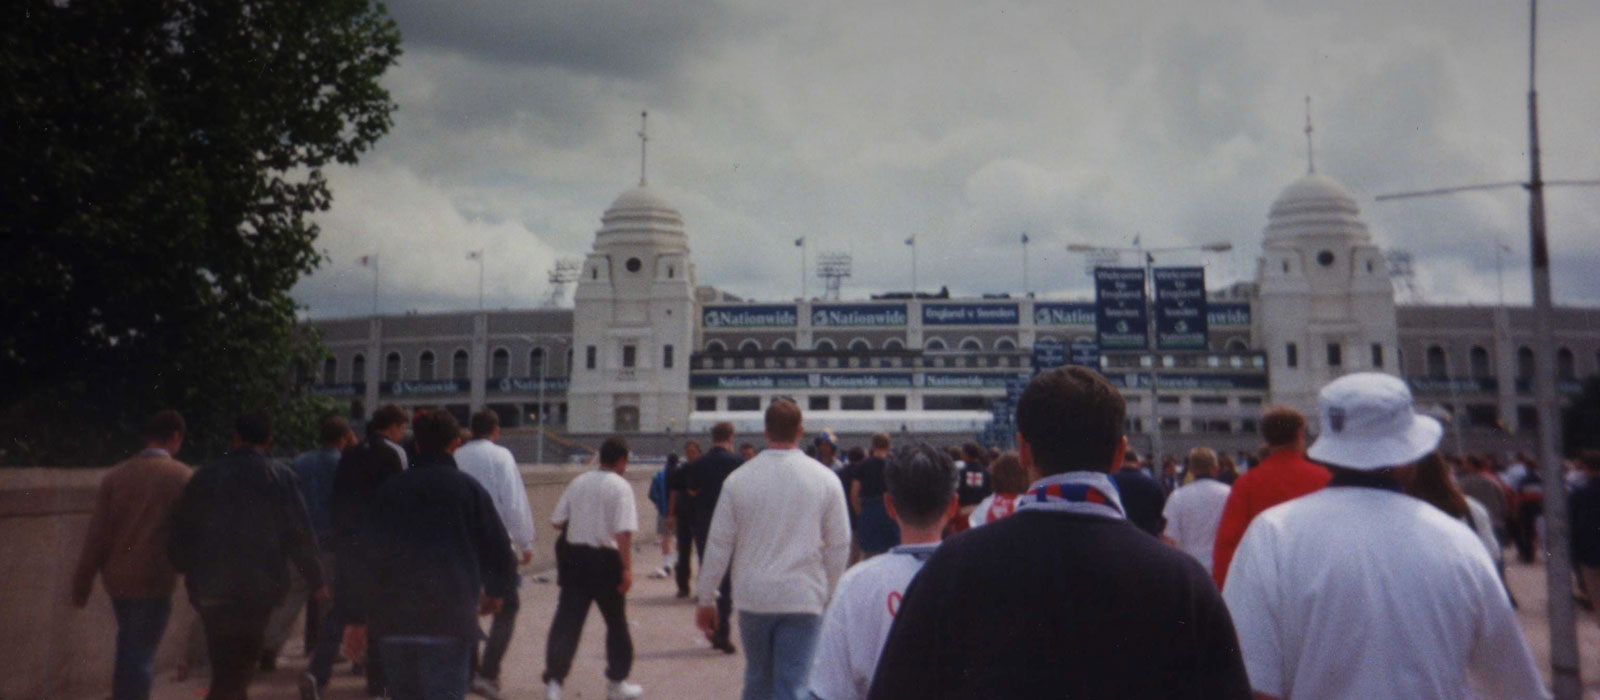 Football fans walking towards the original Wembley stadium.